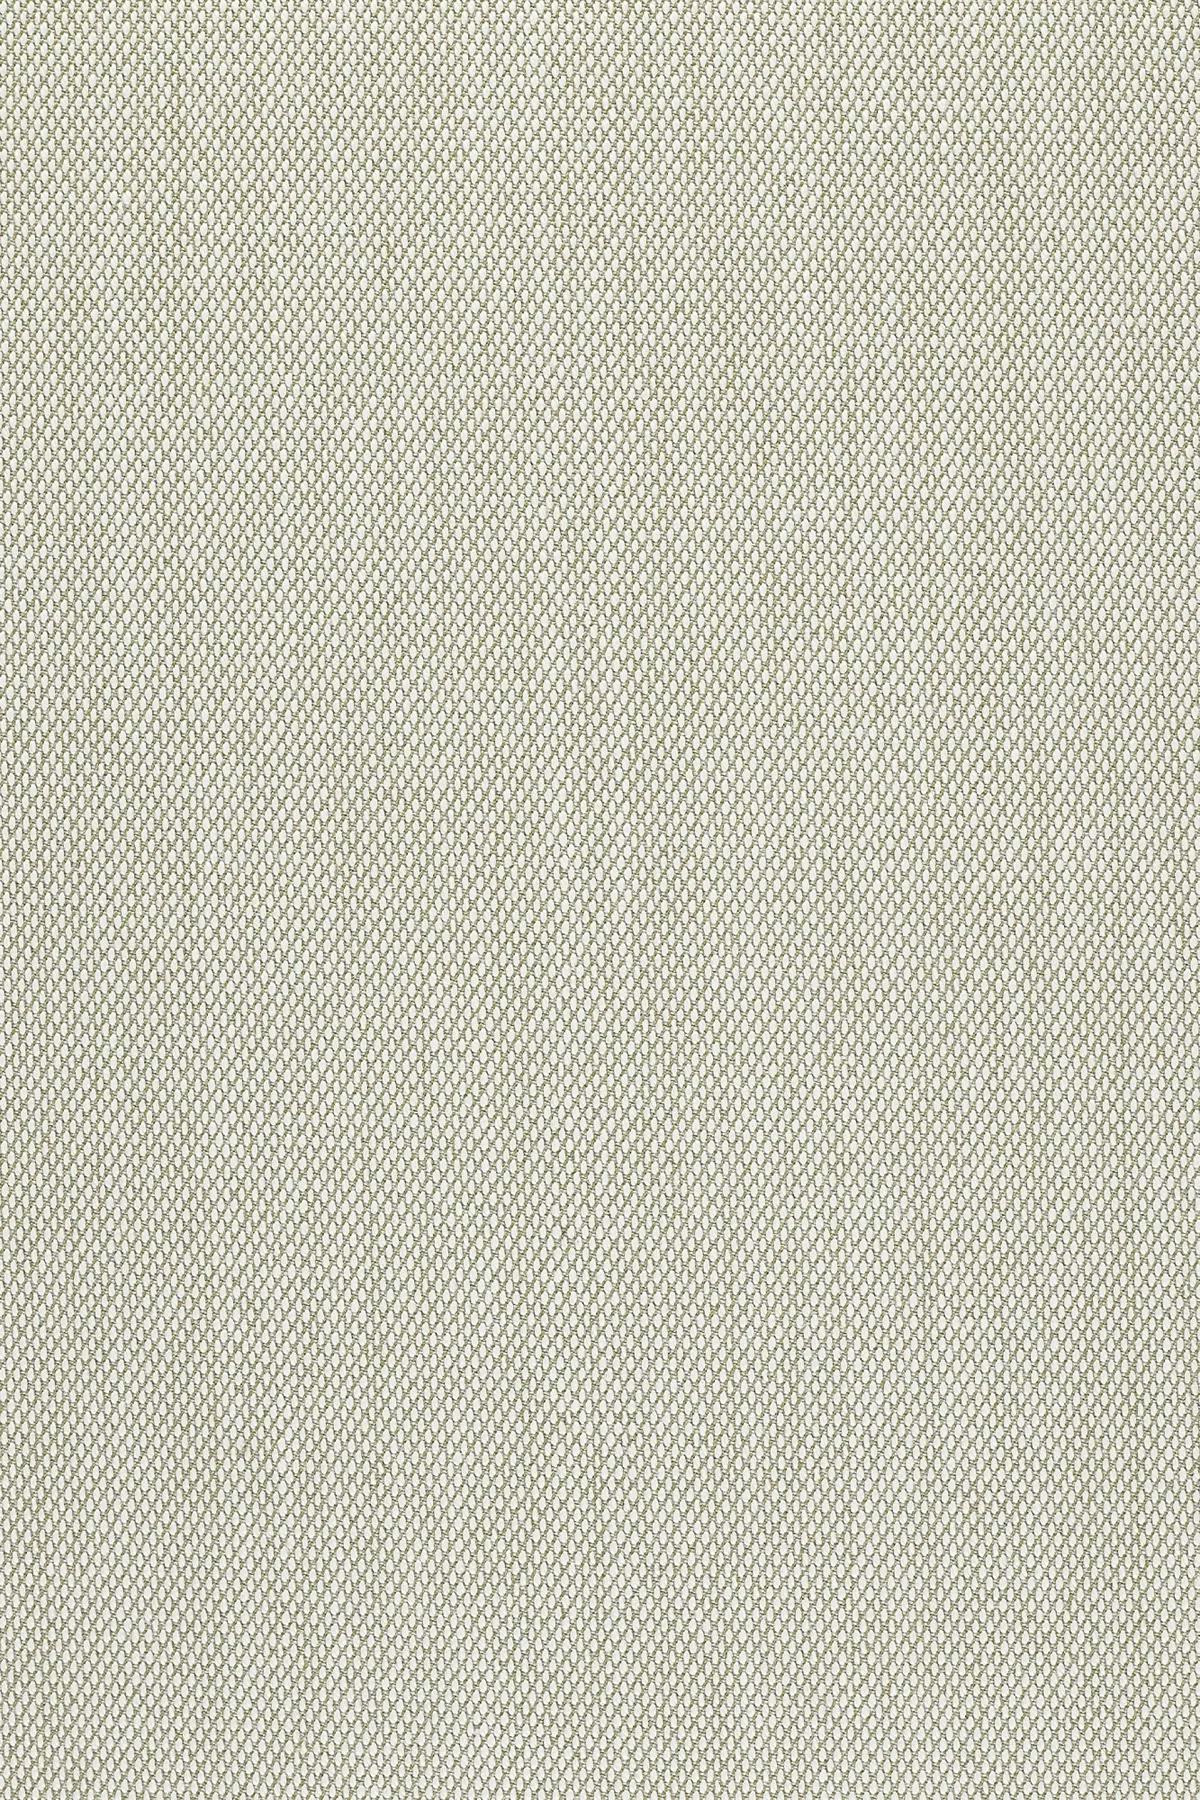 Fabric sample Steelcut Trio 3 213 white